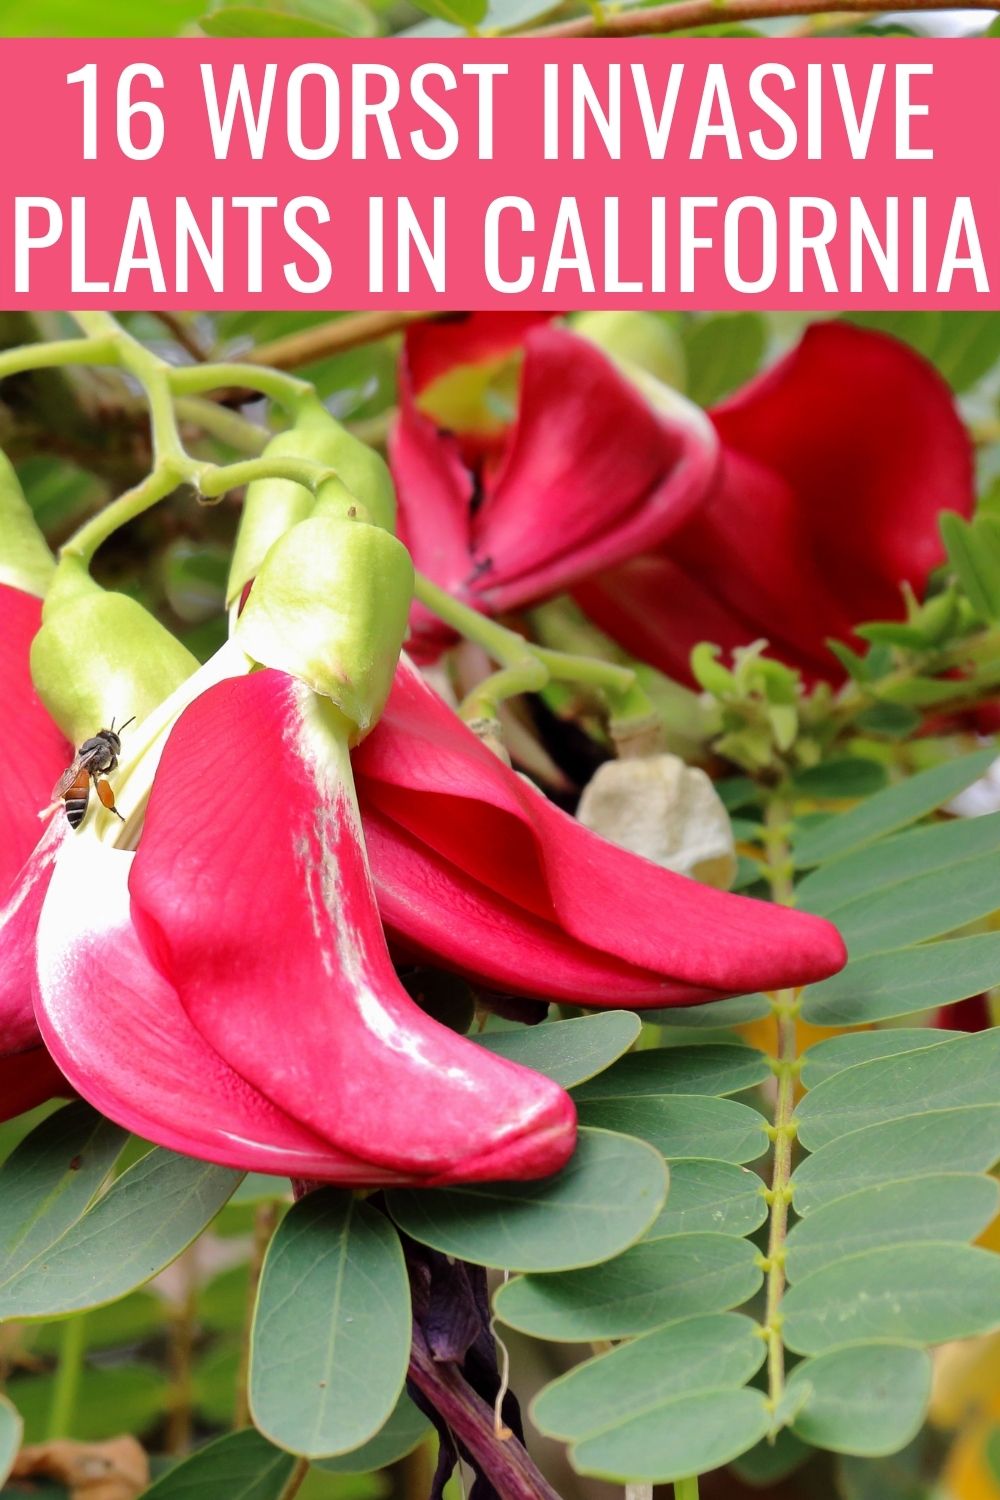 16 Worst Invasive Plants in California